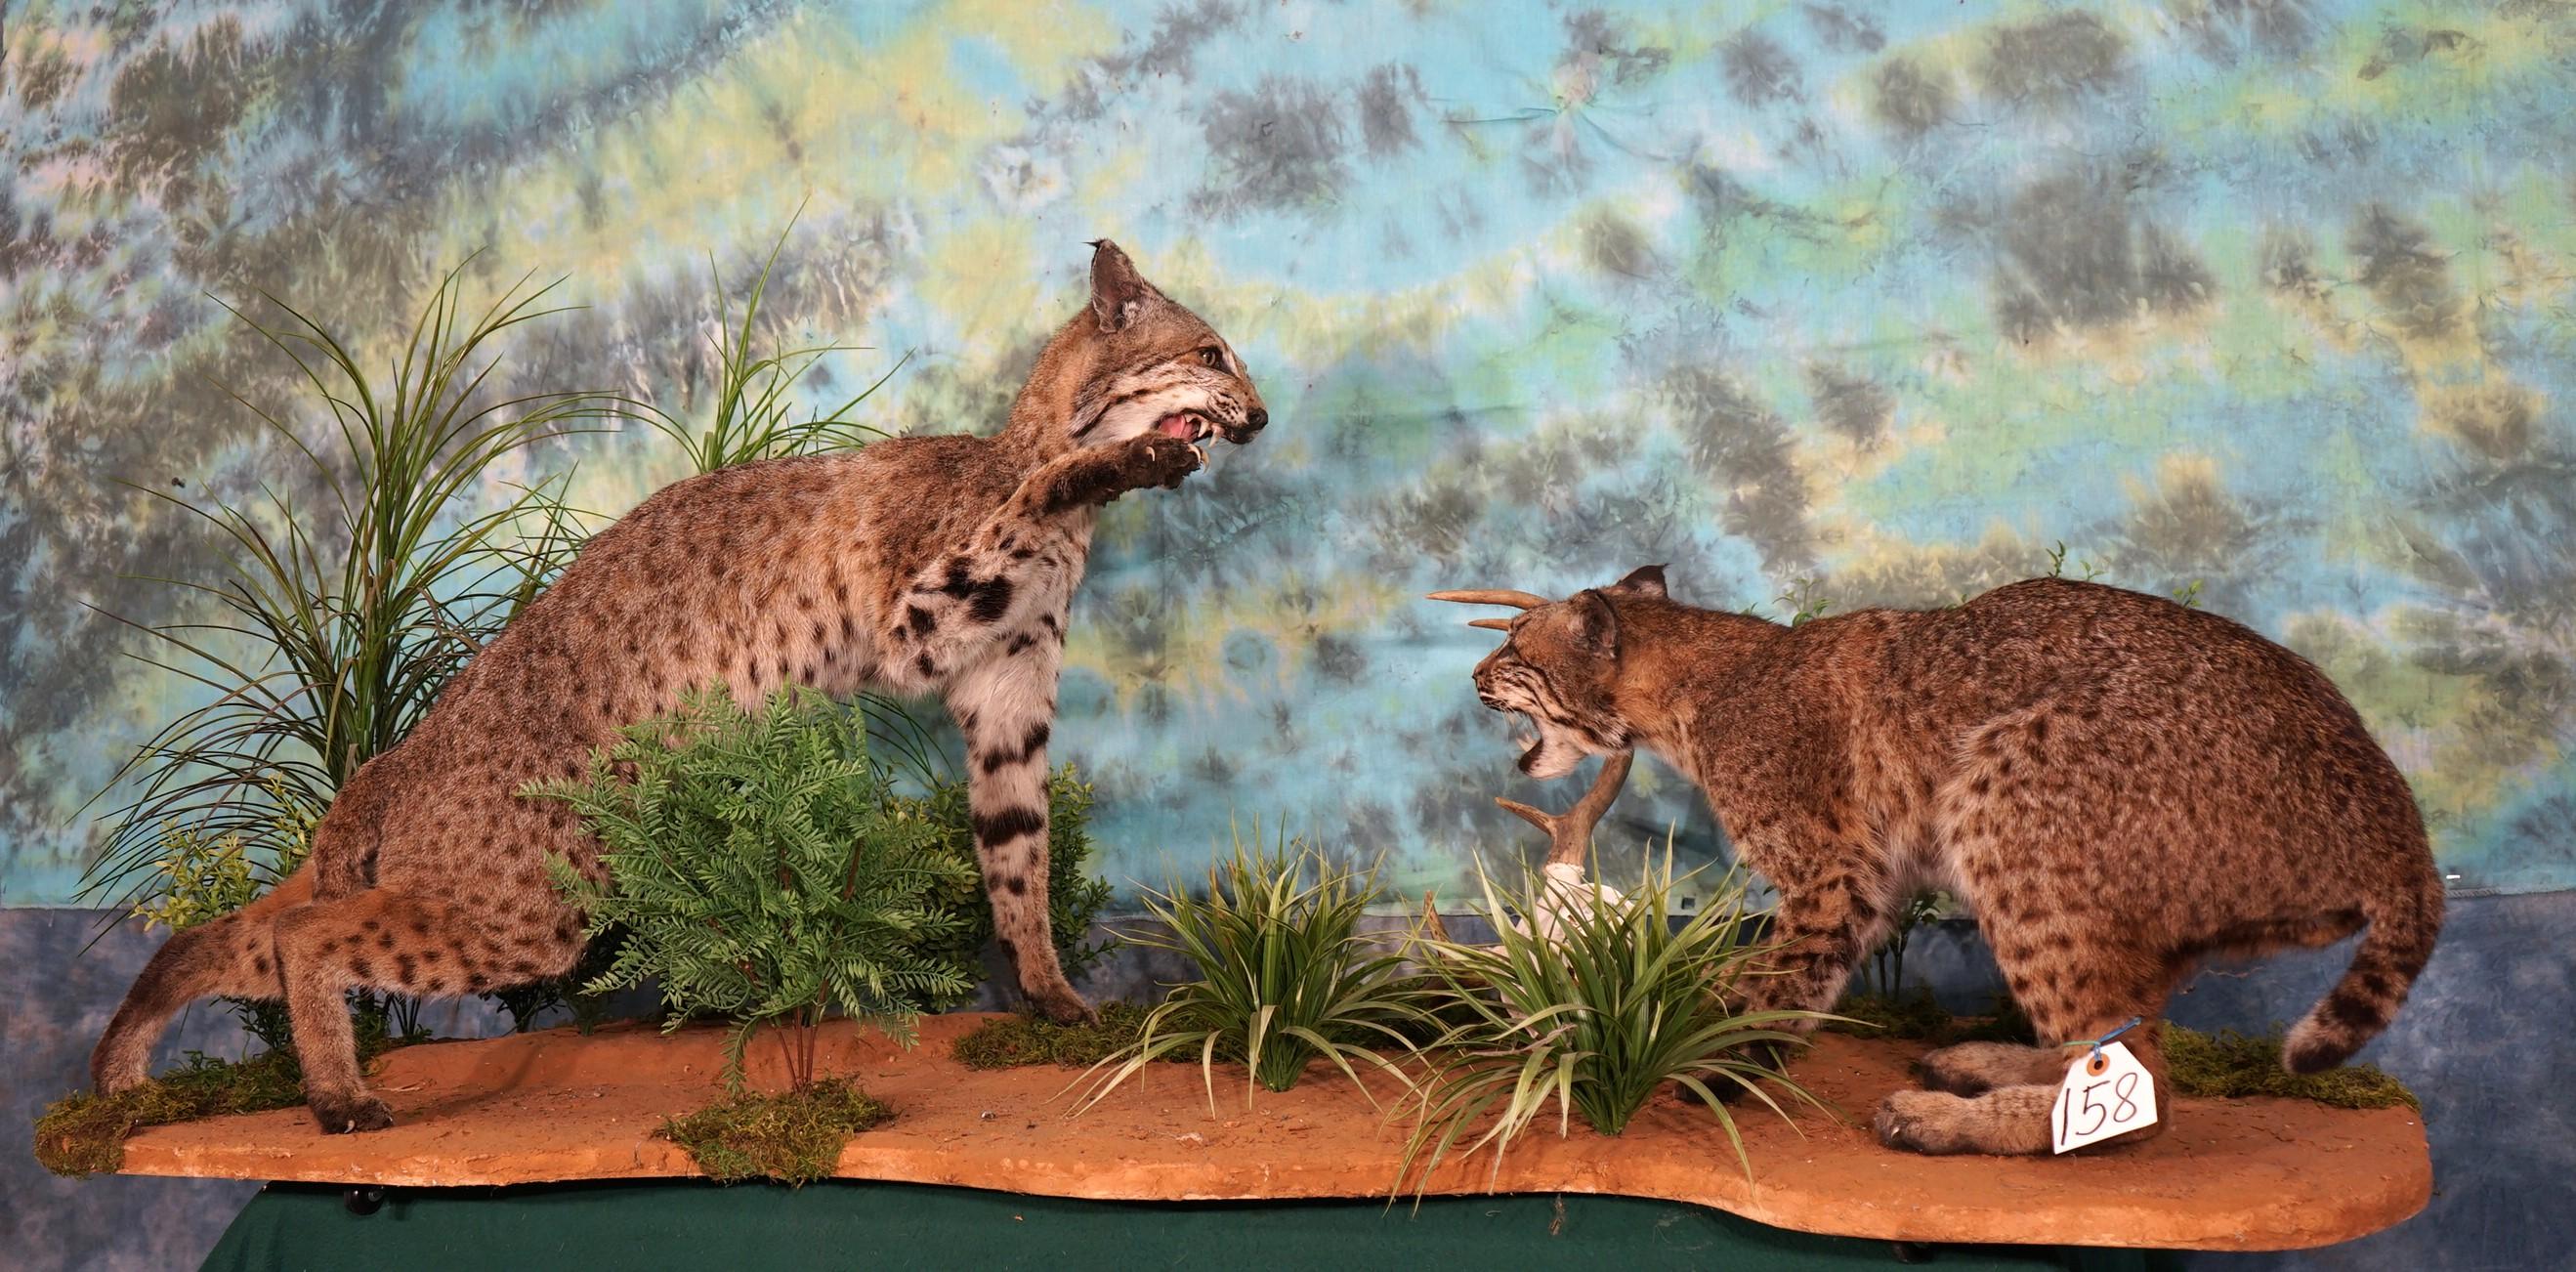 Pair of Bobcat Full Body Mounts in Natural Habitat Scene Fighting